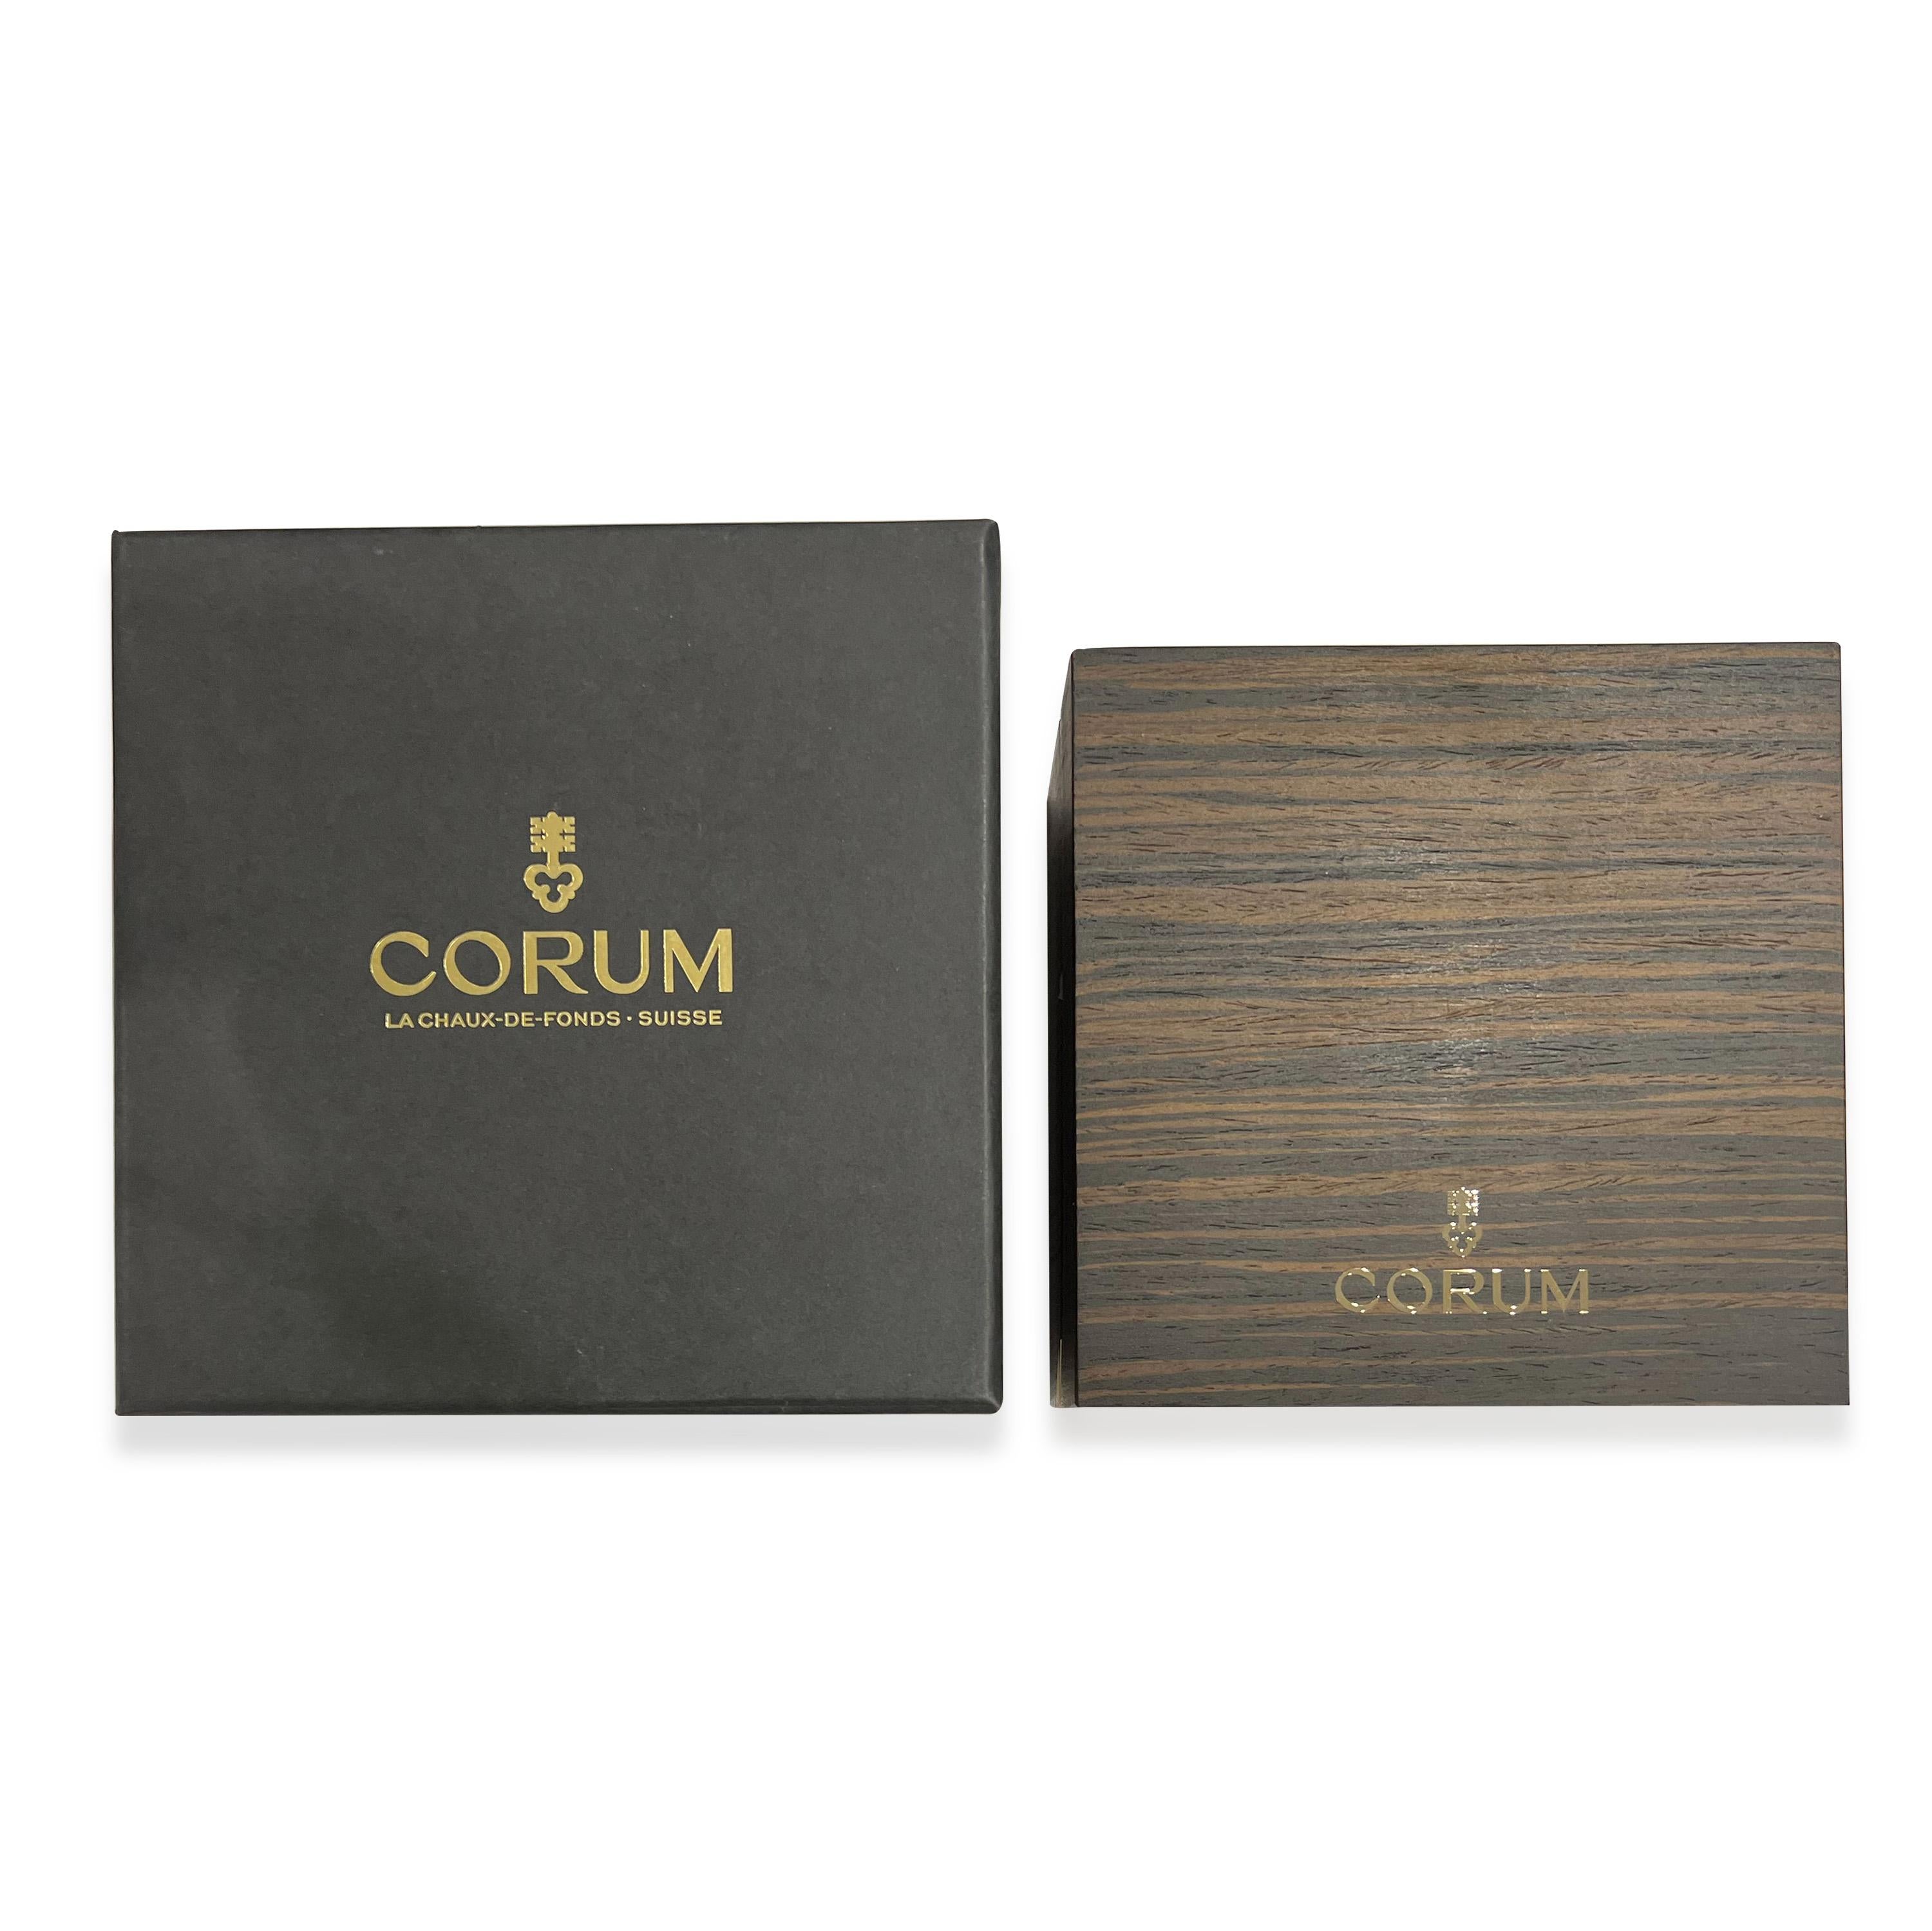 corum admirals cup limited edition price